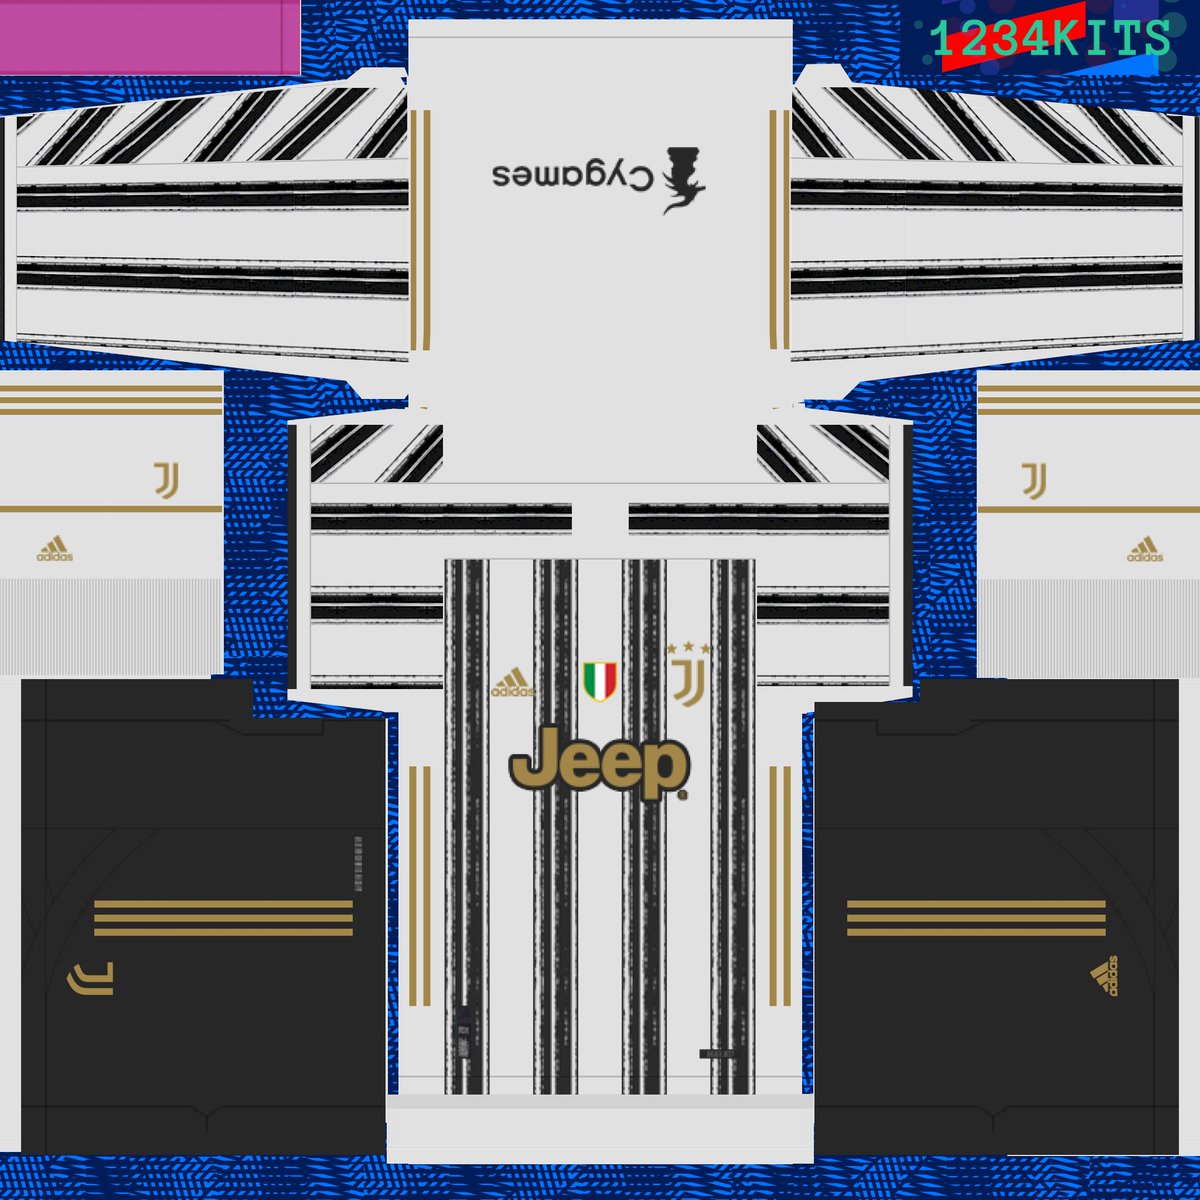 Kits Efootball Pes2021 On Twitter Kitmaker 1234kits Juventus Seriea Home Adidas Kits 2020 2021